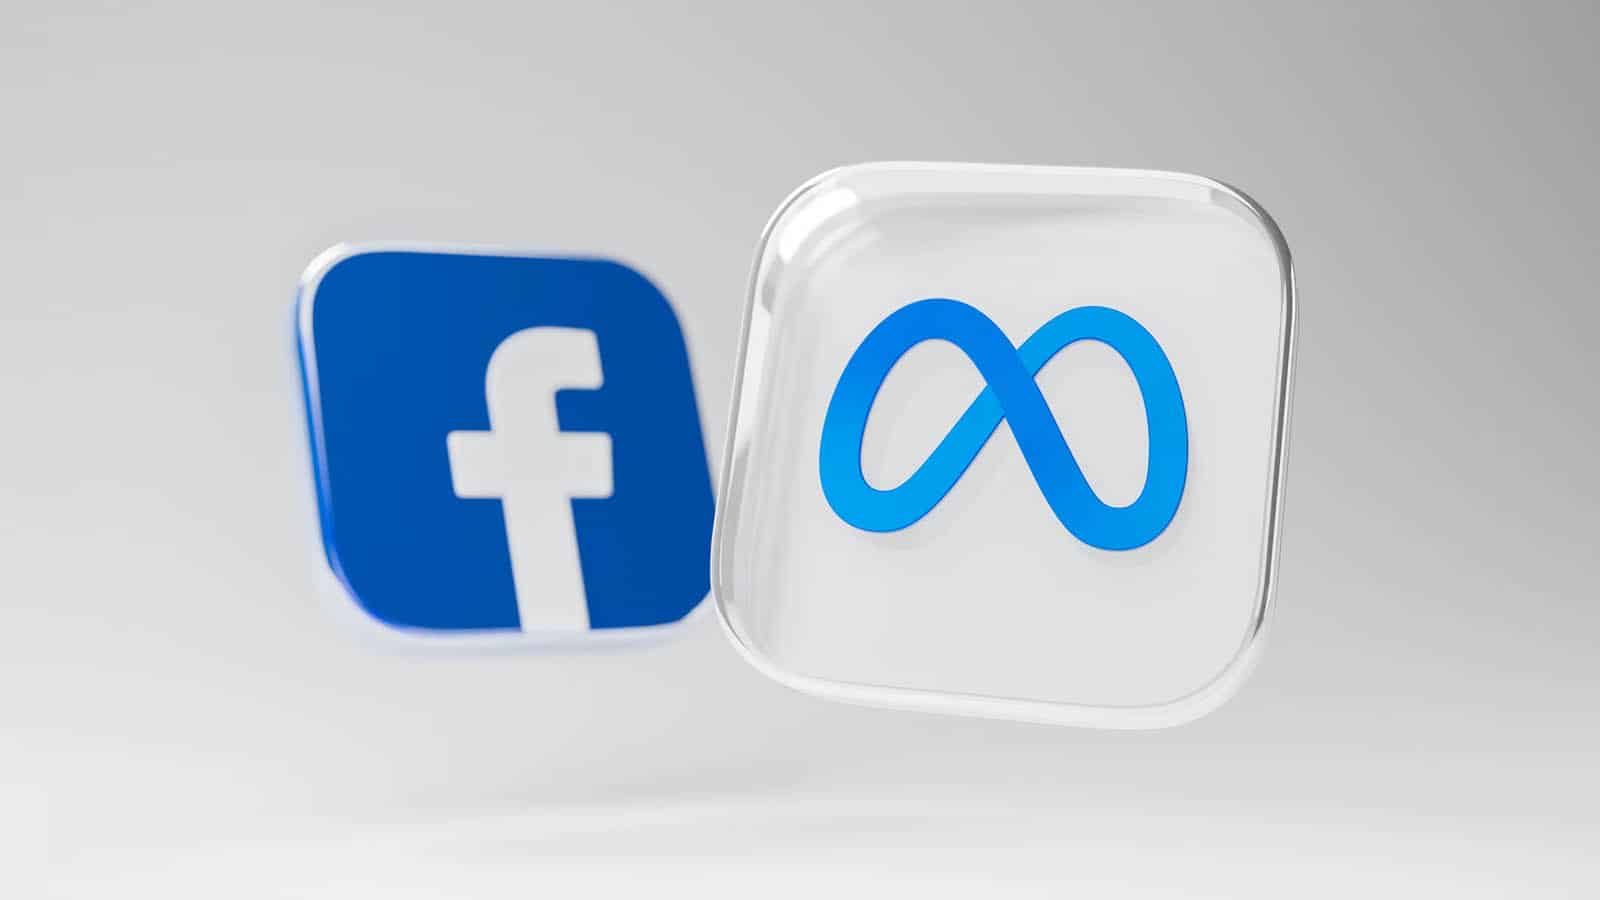 meta and facebook logo on grey background